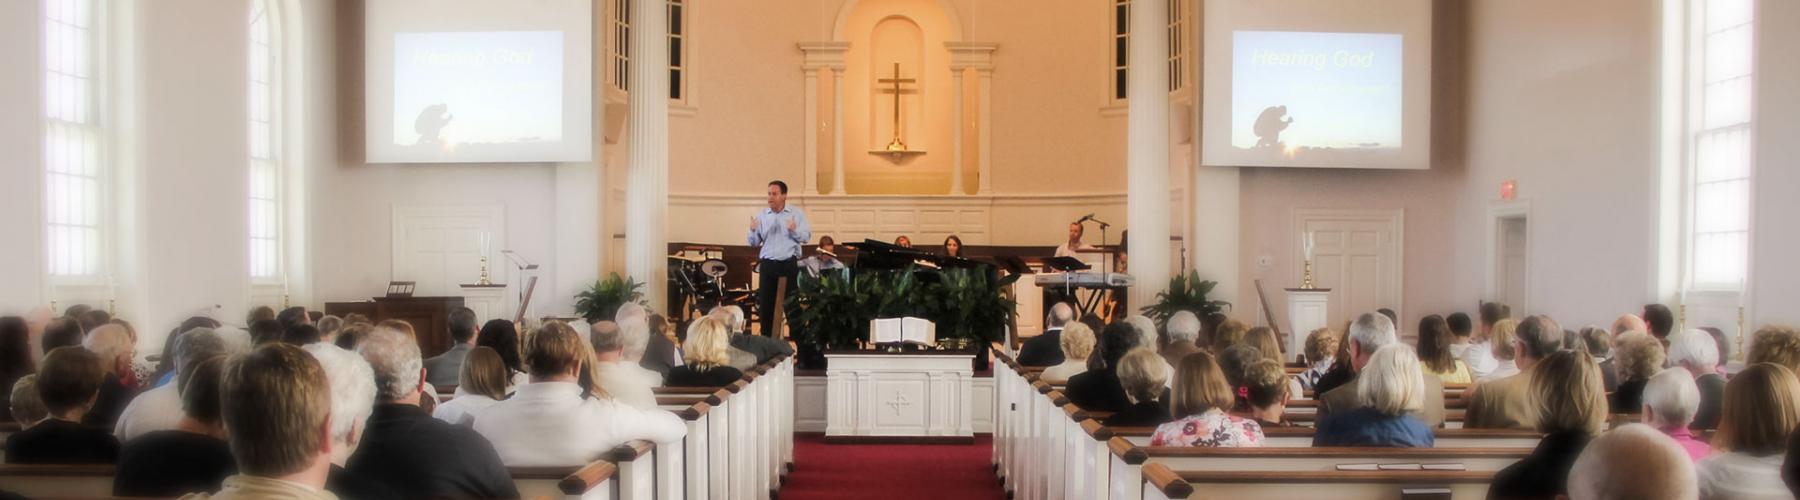 Congregation Listens to Pastor Deliver a Sermon